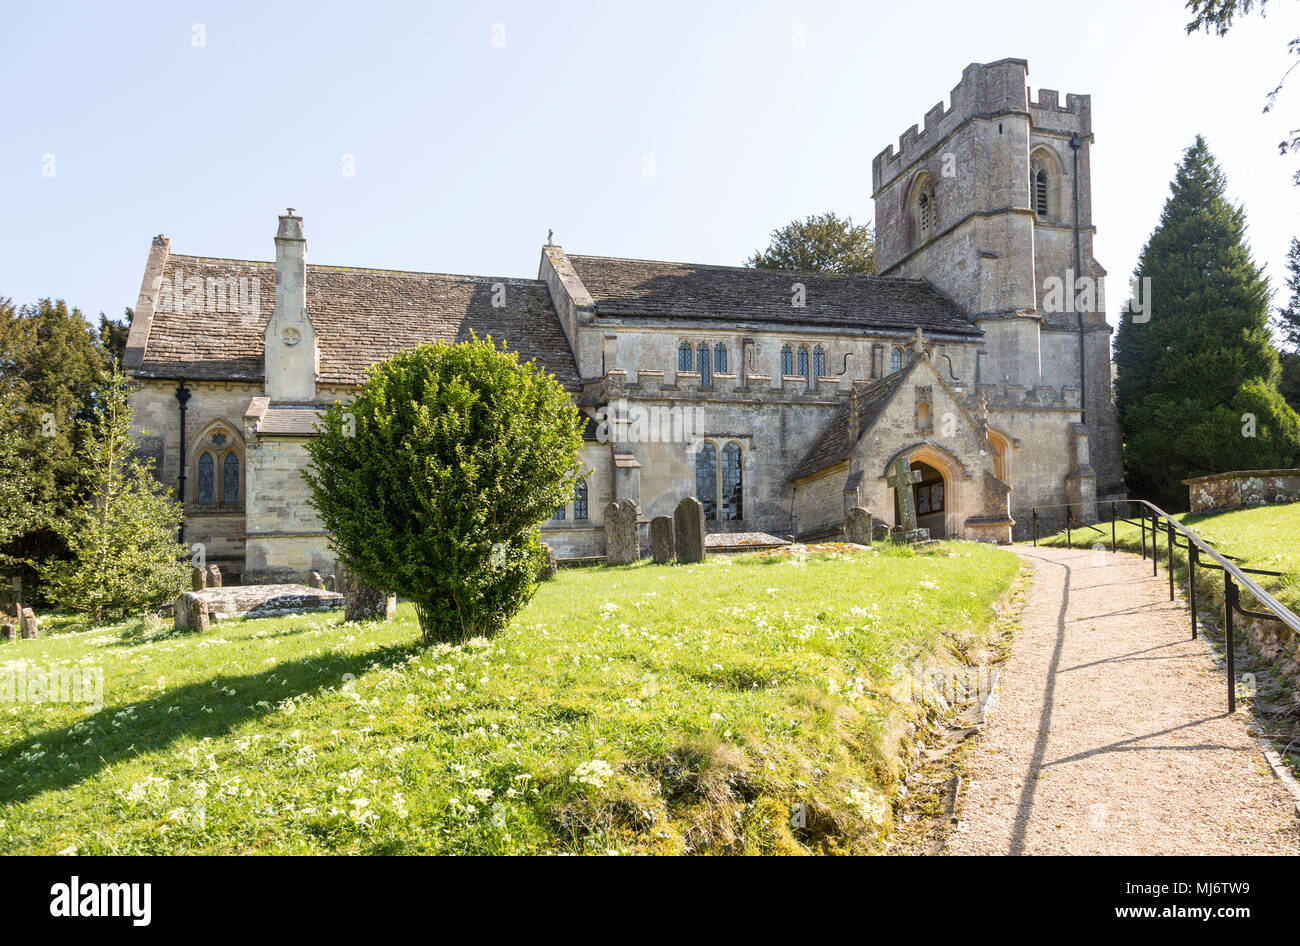 Church of Saint Within, Compton Bassett, Wiltshire, England, UK Stock Photo